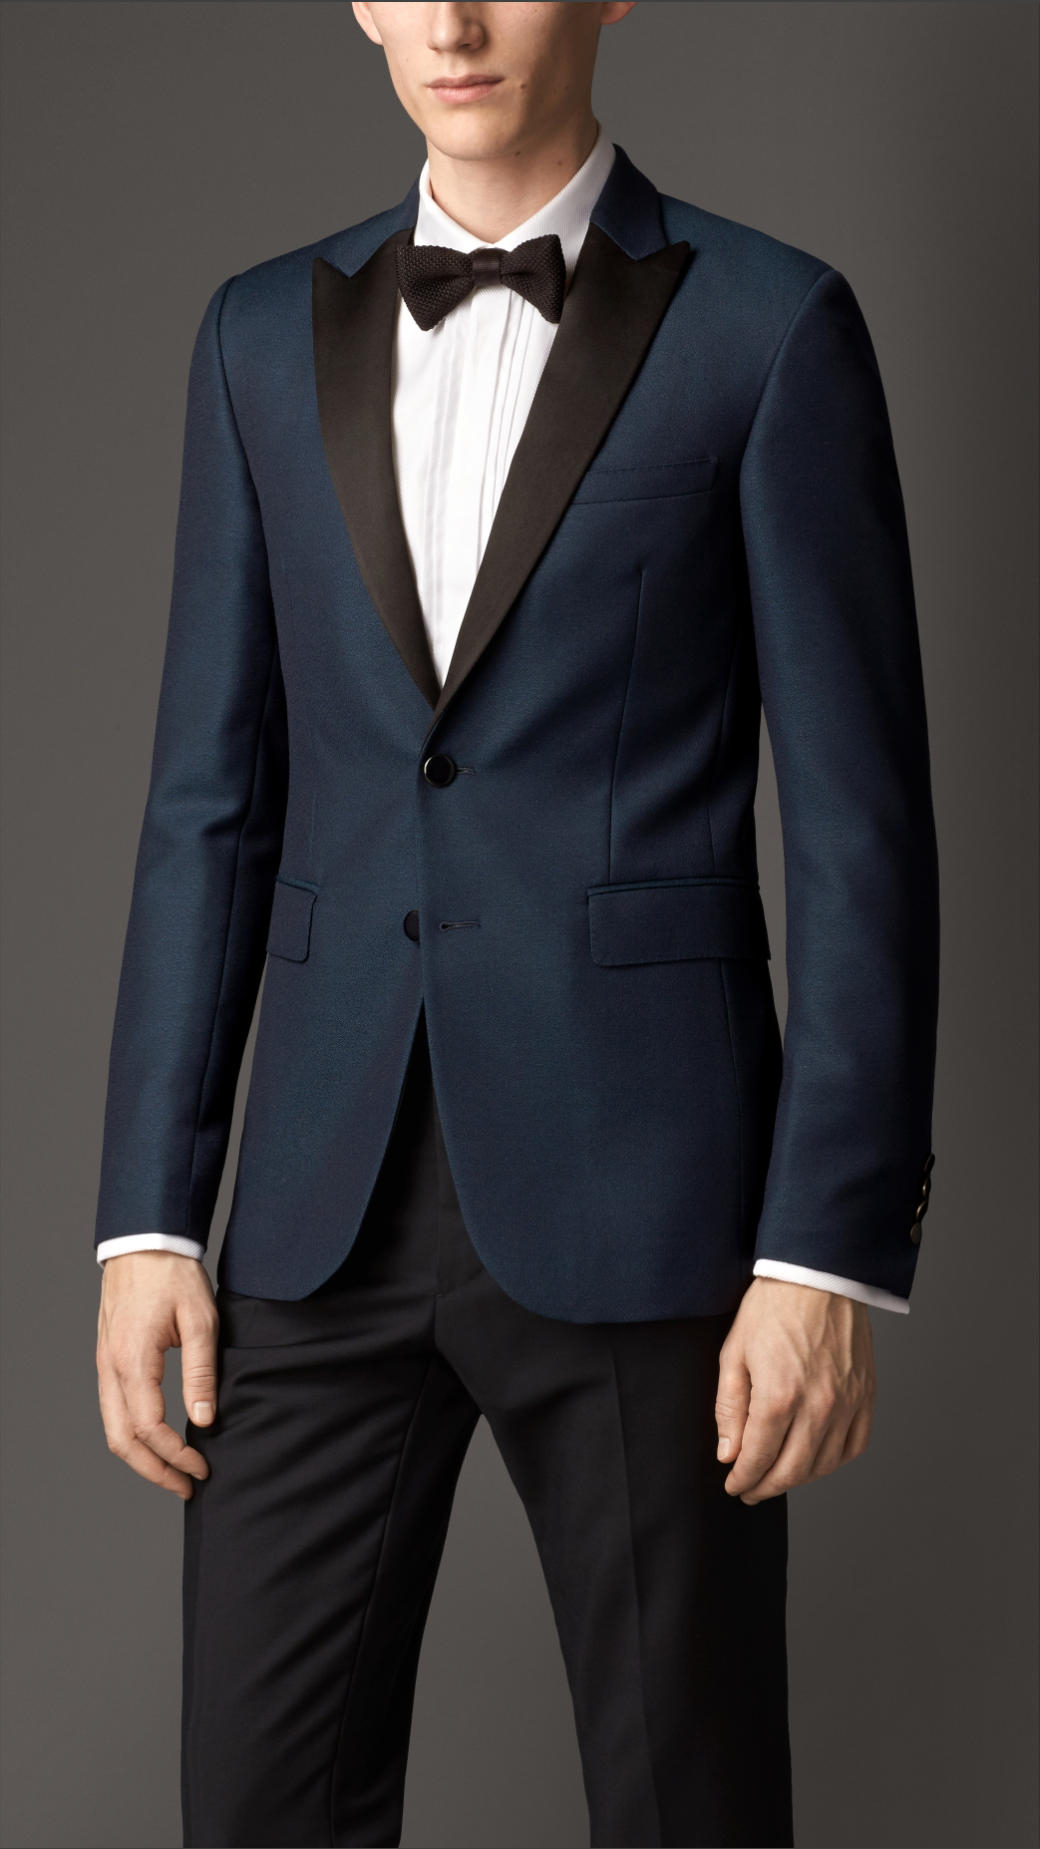 Lyst - Burberry Modern Fit Satin Lapel Tuxedo Jacket in Blue for Men